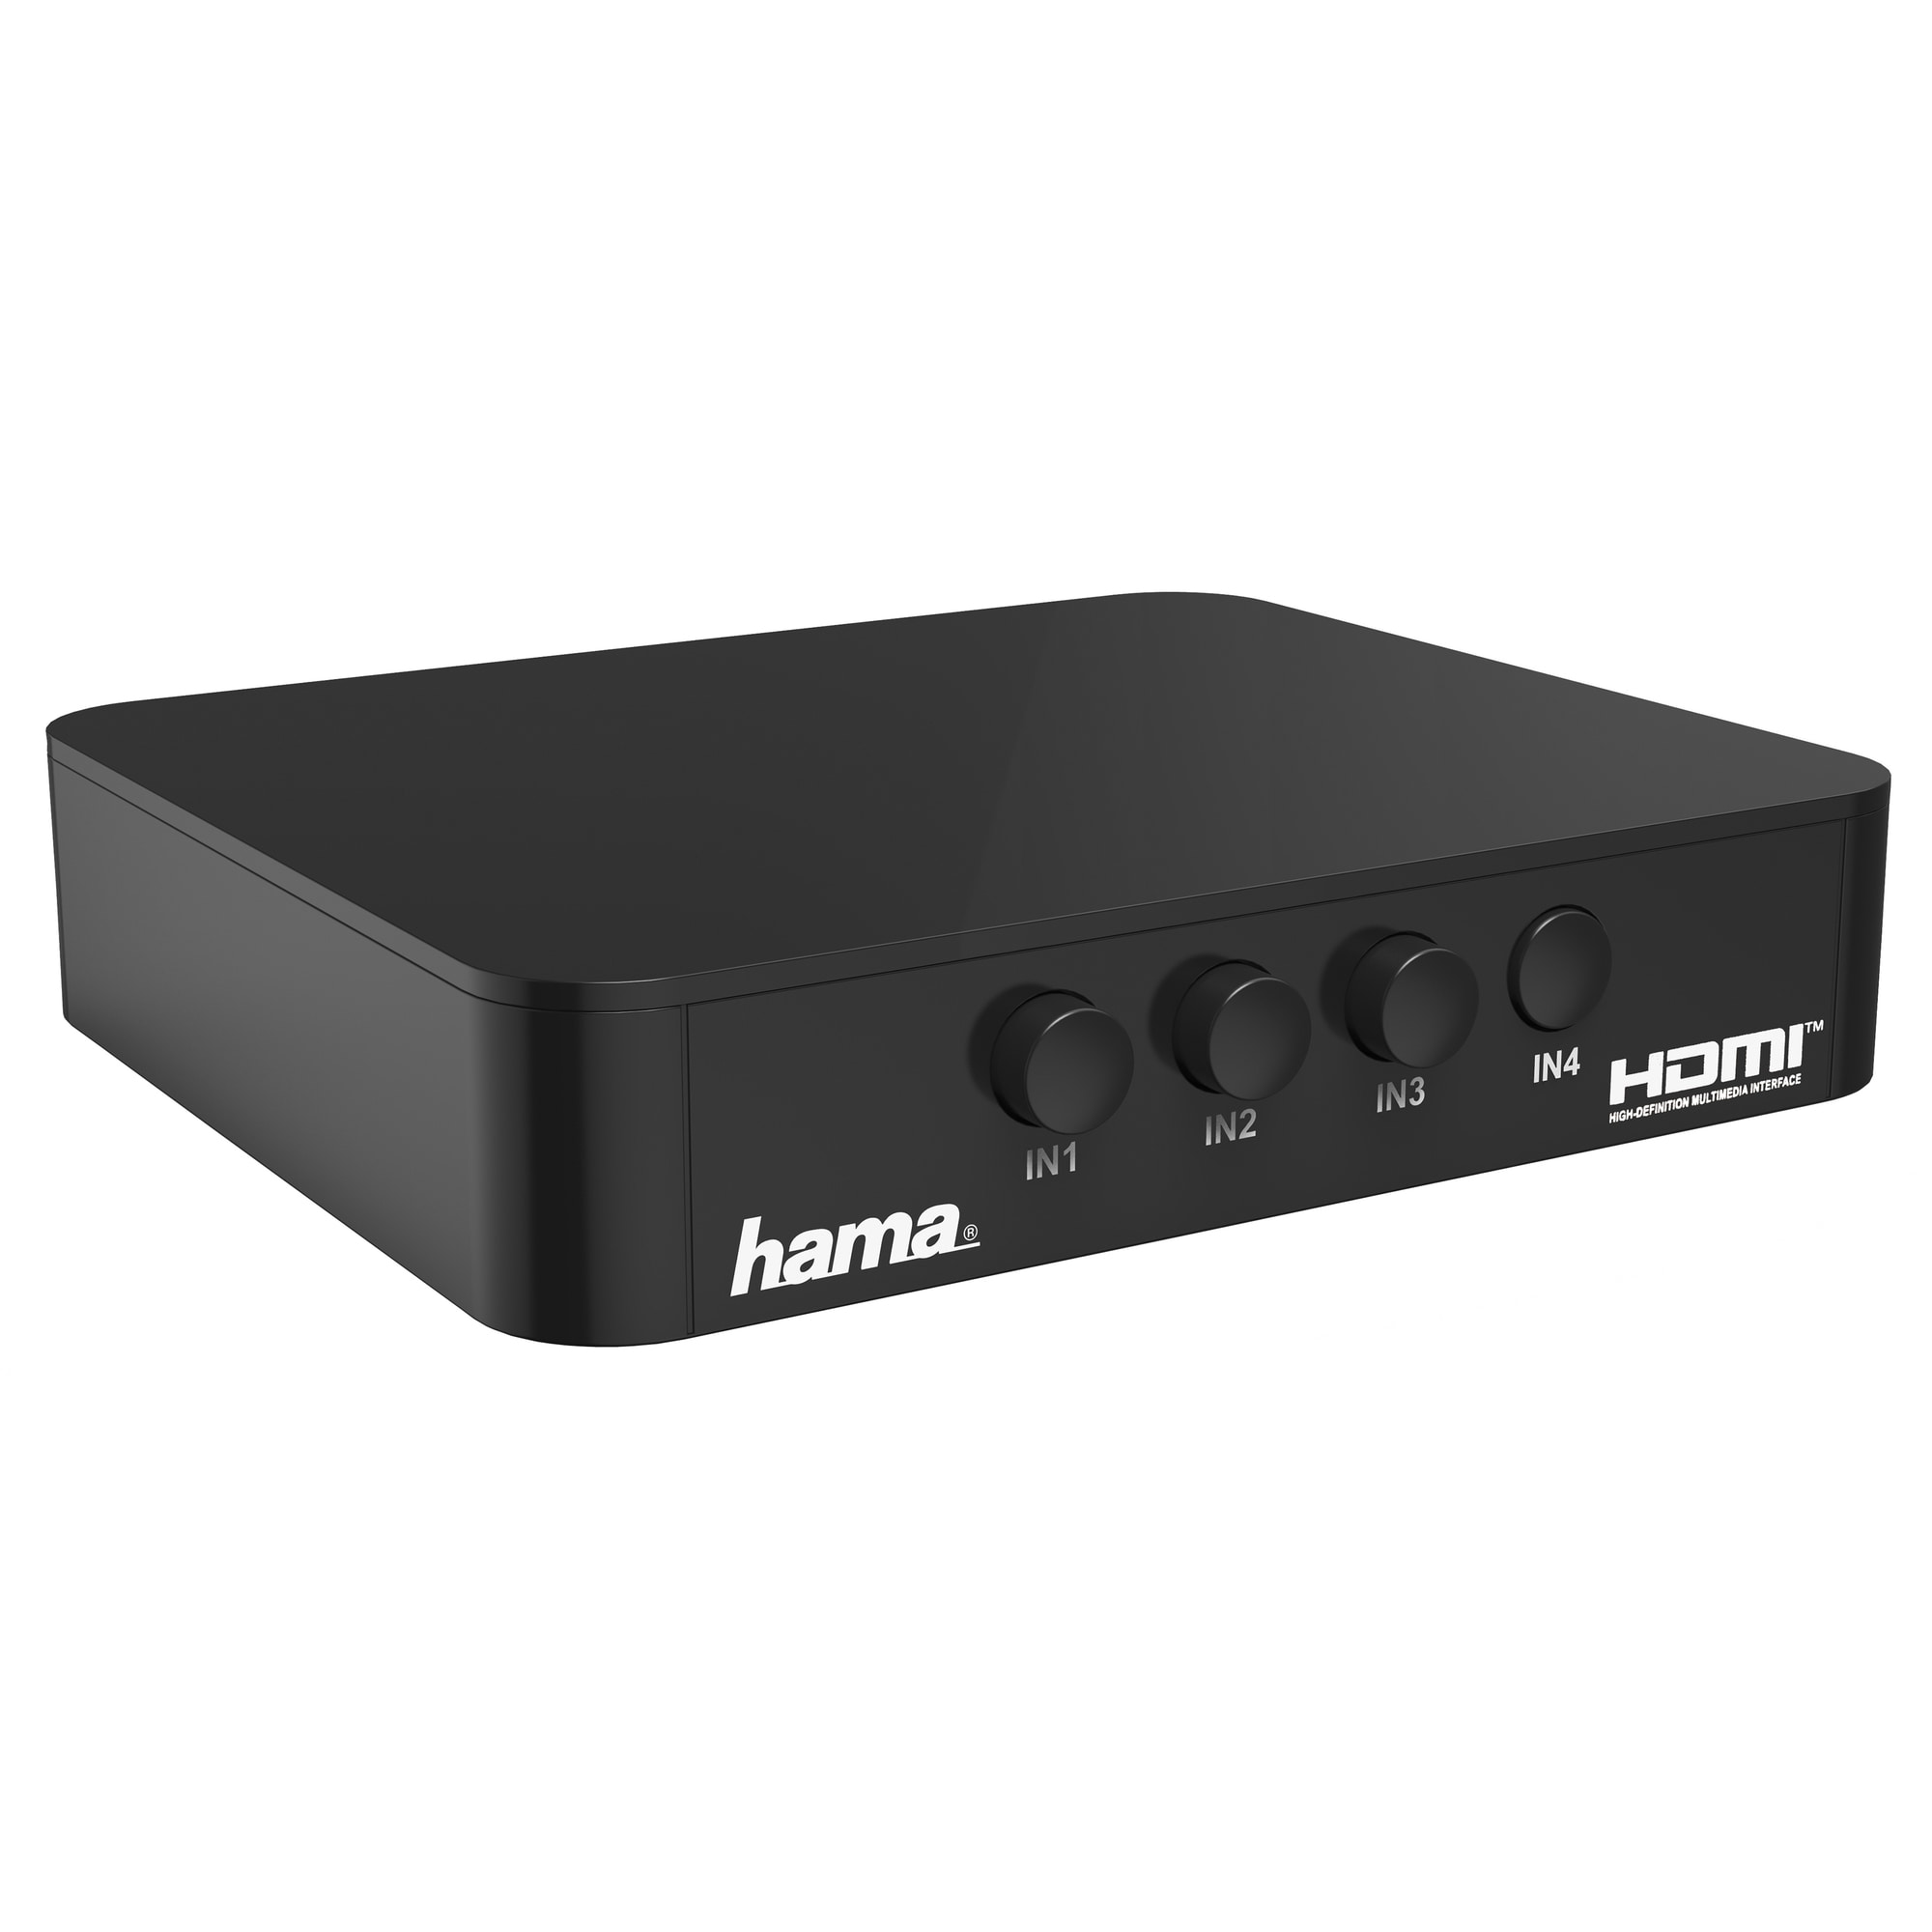 Hama G-410 HDMI switch - Elkjøp